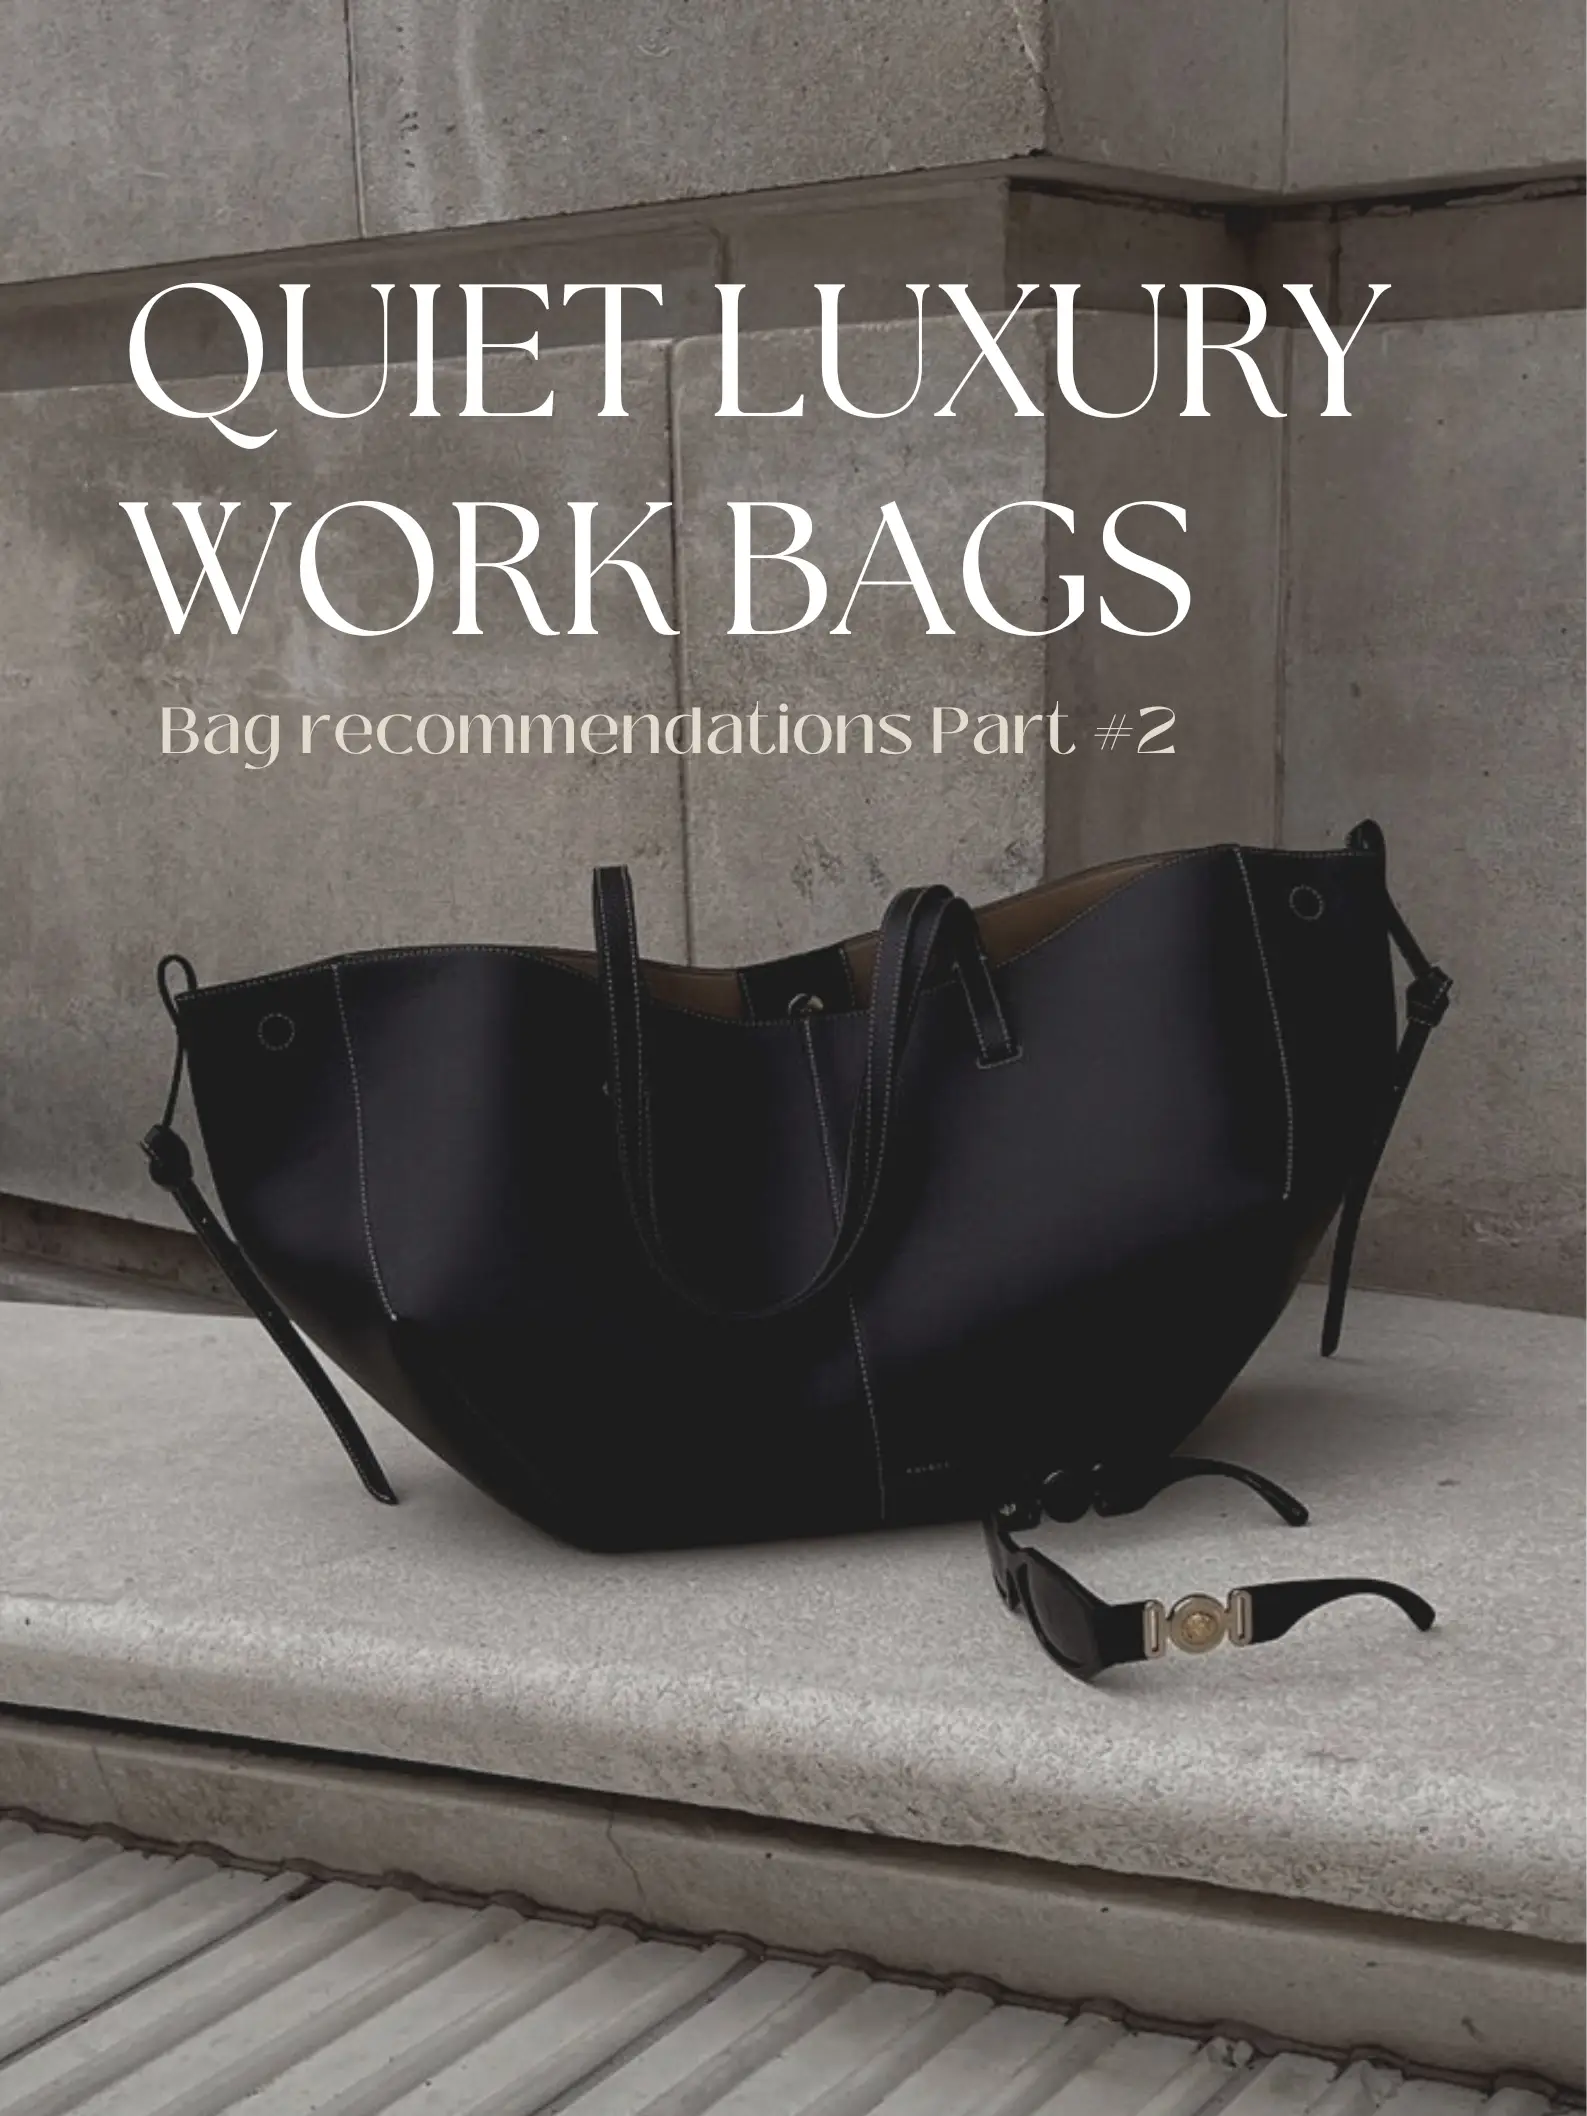 Mini Lady Dior Bag Black Patent Cannage Calfskin | DIOR